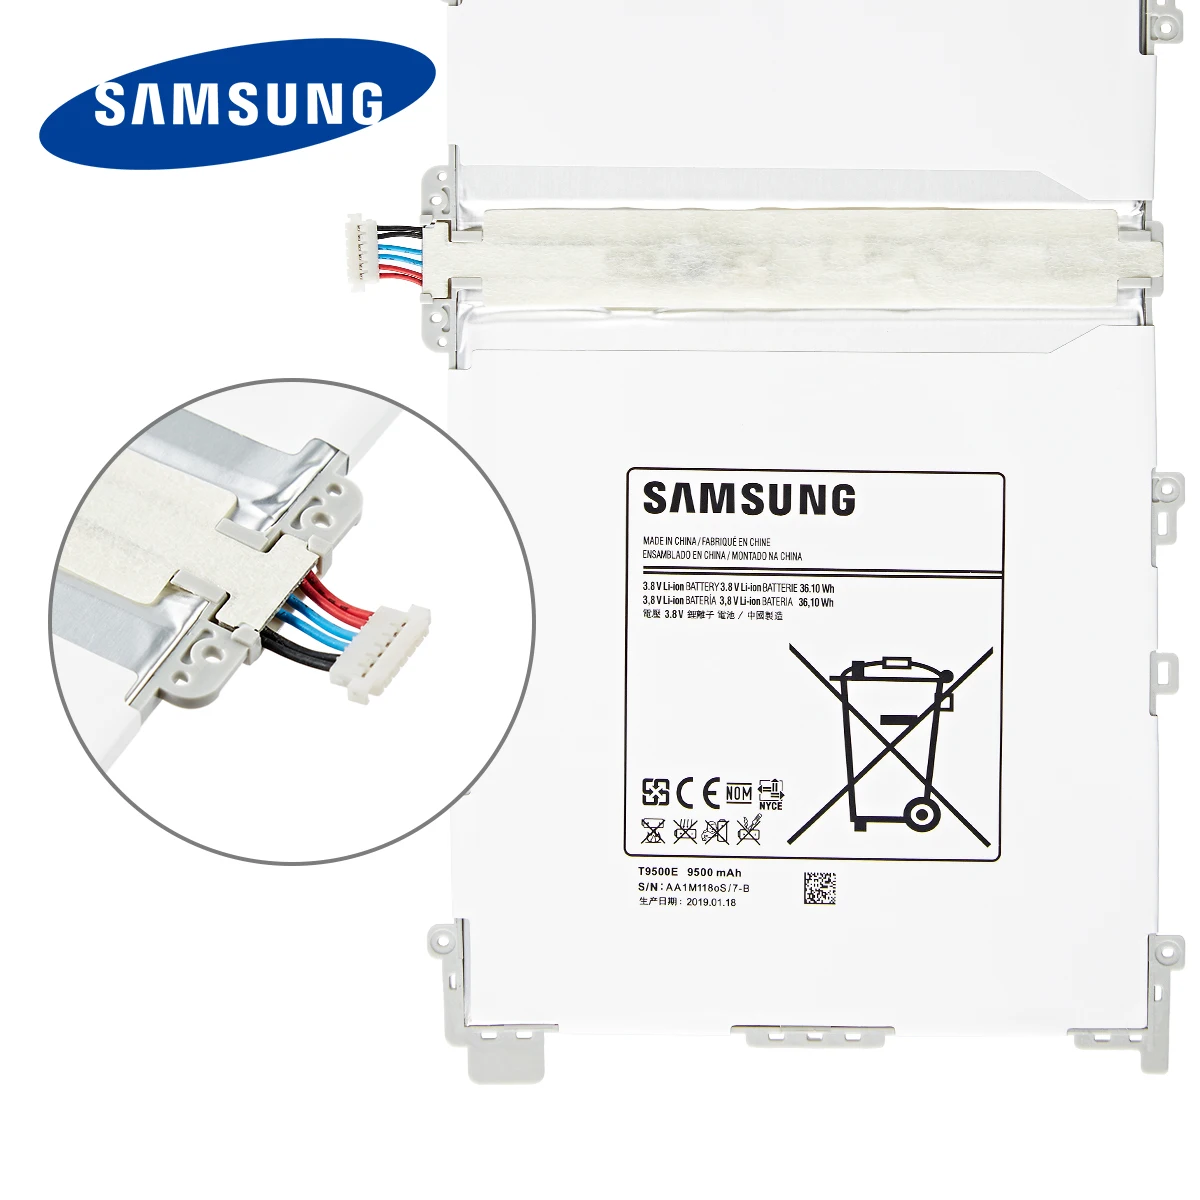 Originalni SAMSUNG Tablični T9500E T9500K T9500C T9500U baterije 9500mAh Za Samsung Galaxy Note 12.2 P900 P901 P905 T900 SM-P900